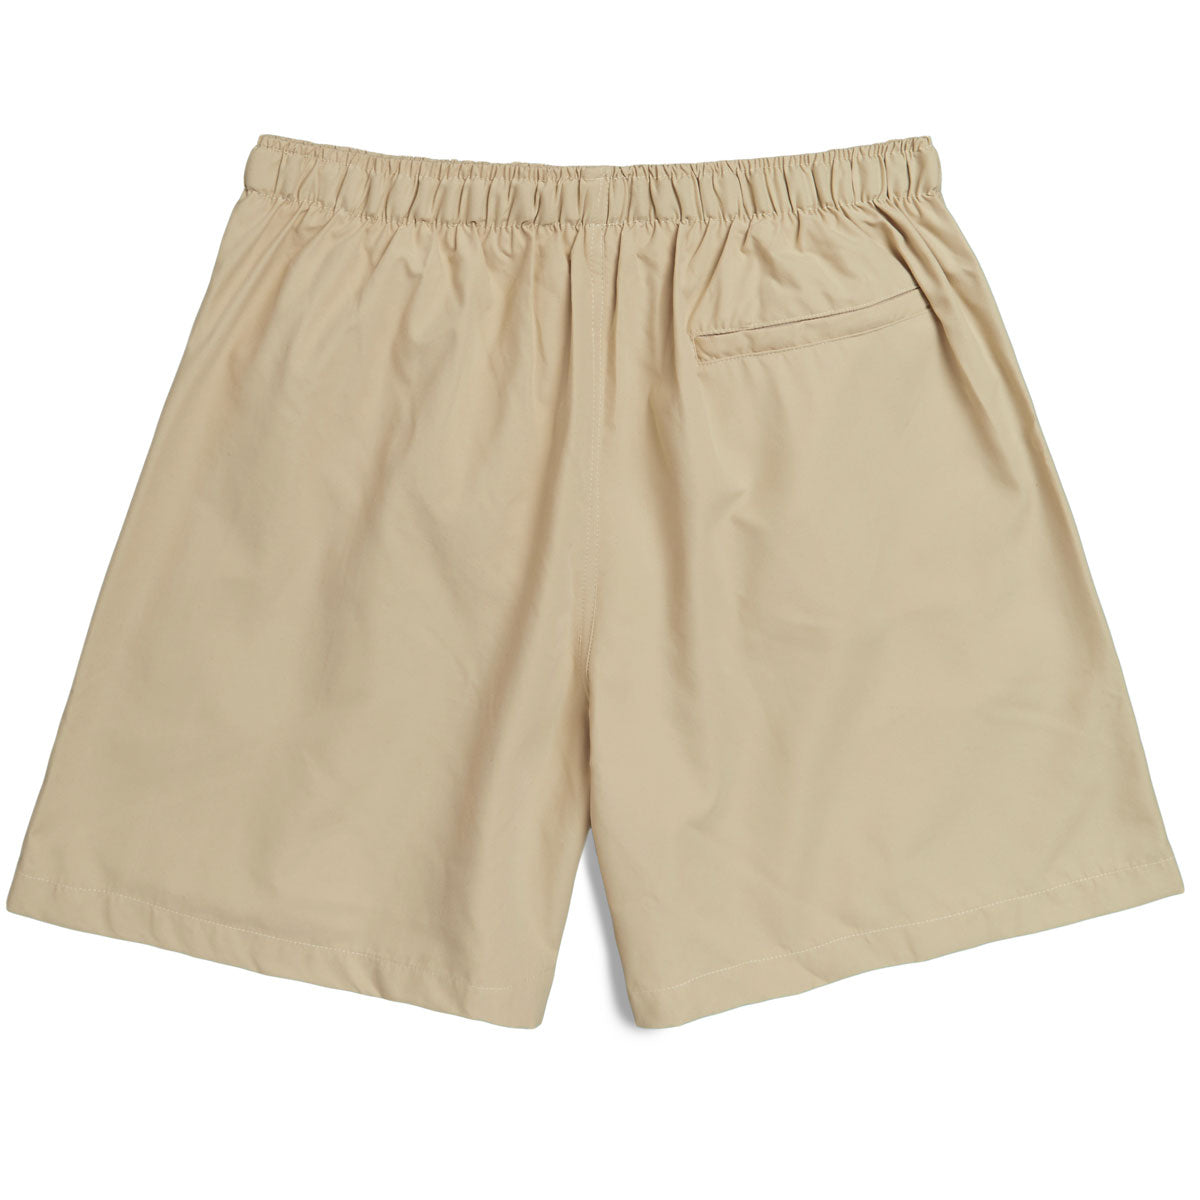 CCS Swim Club Hybrid Shorts - Khaki image 4